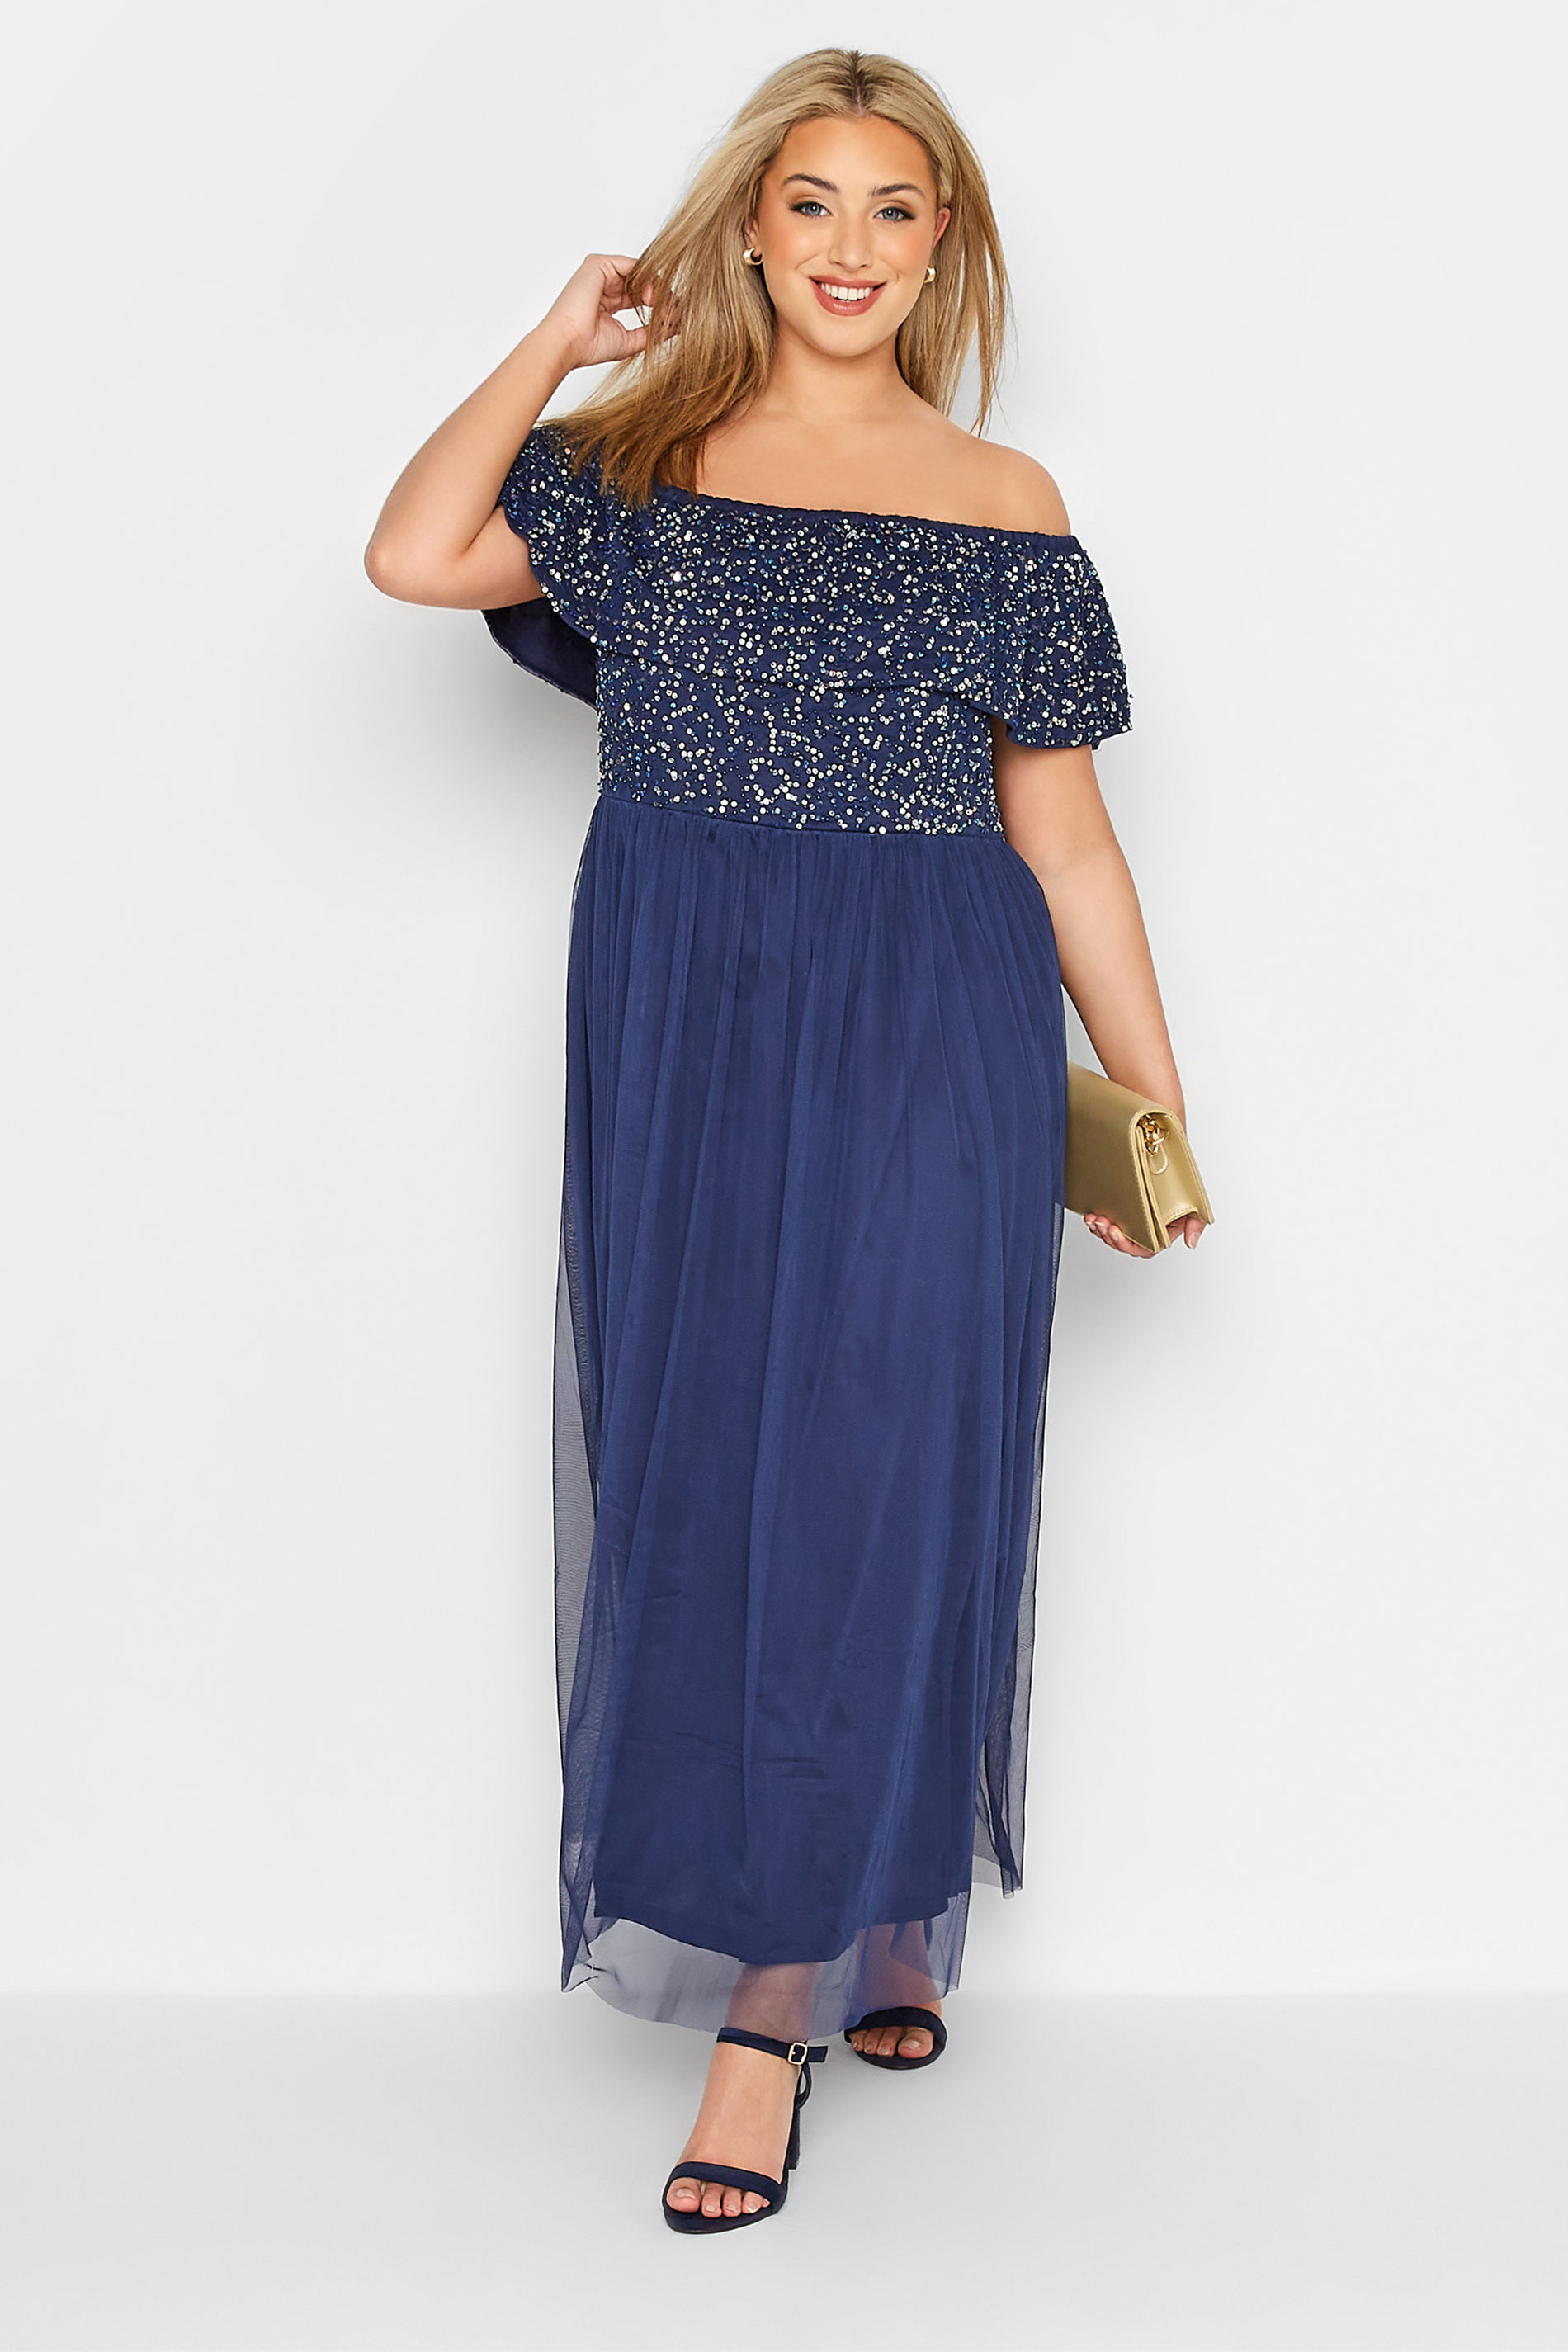 LUXE Plus Size Blue Bardot Hand Embellished Maxi Dress | Yours Clothing 2